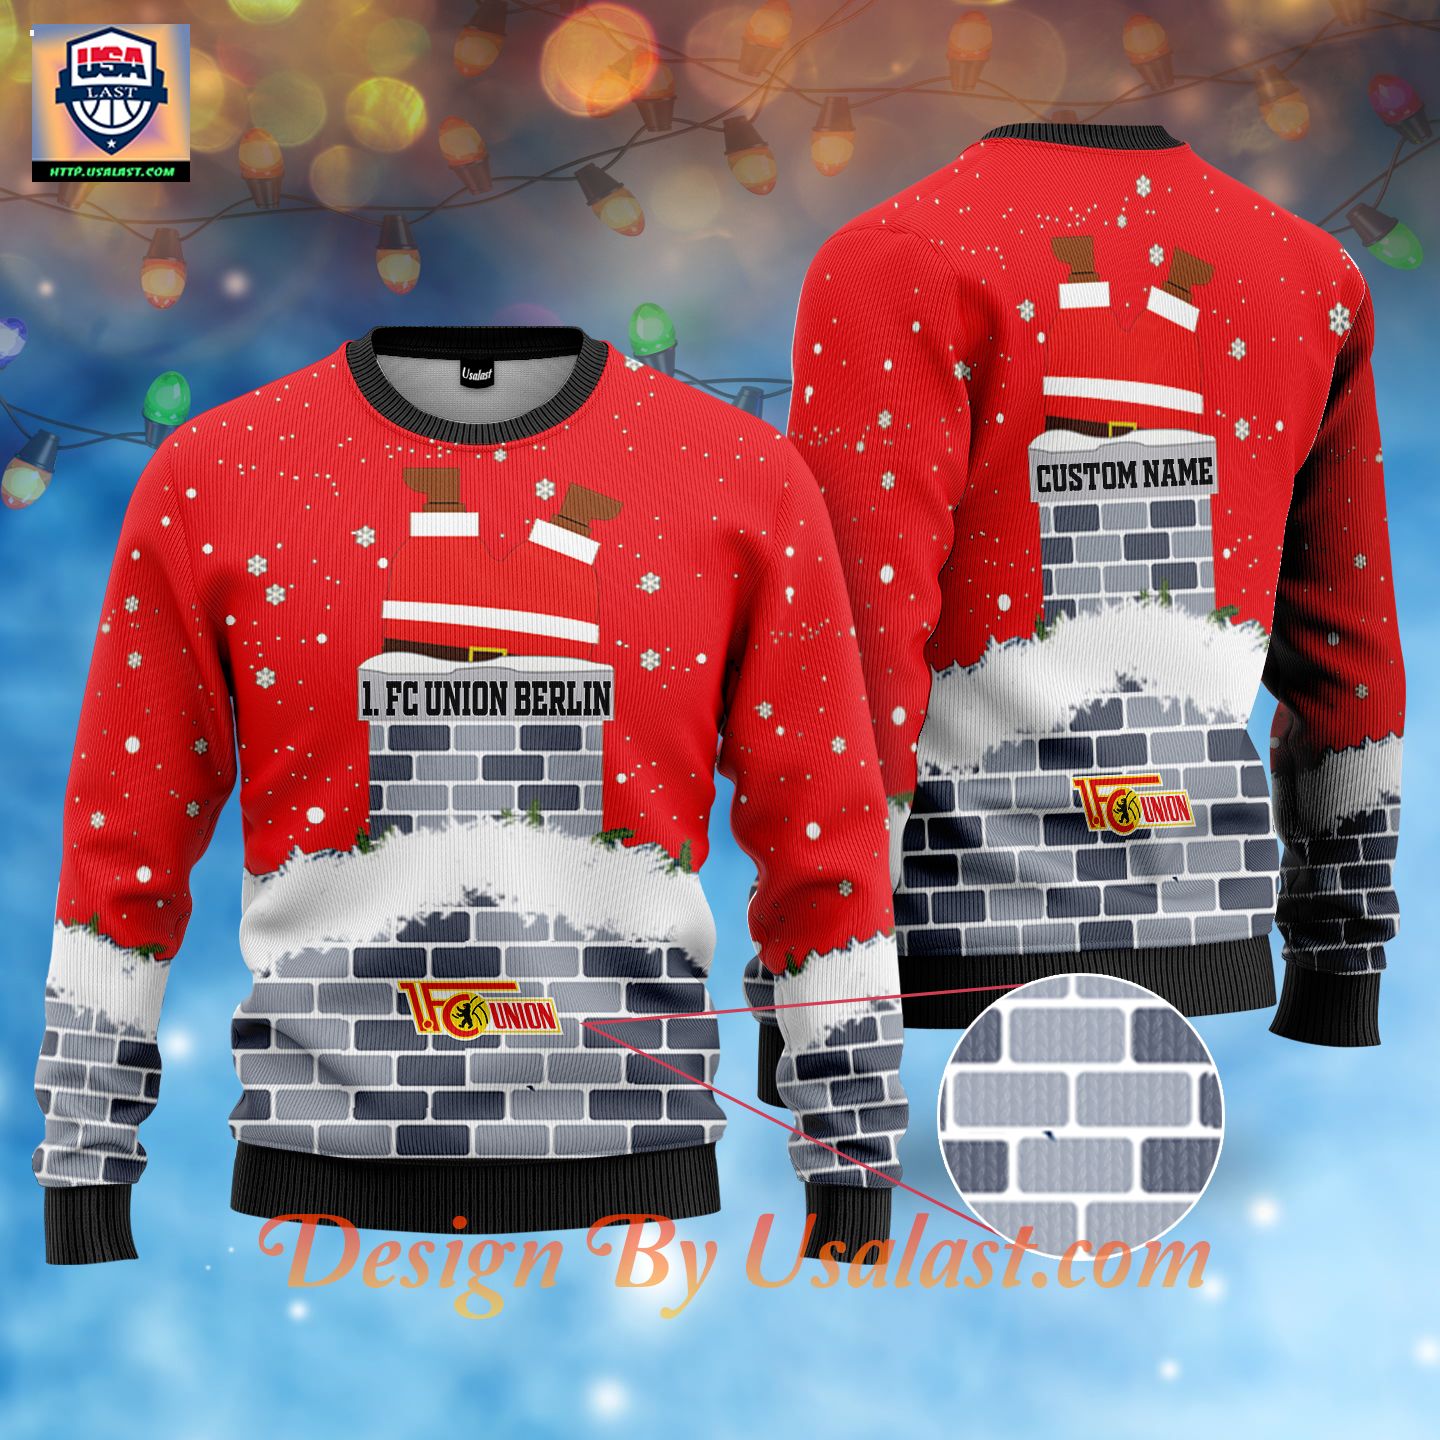 1. FC Union Berlin Custom Name Ugly Christmas Sweater - Looking so nice